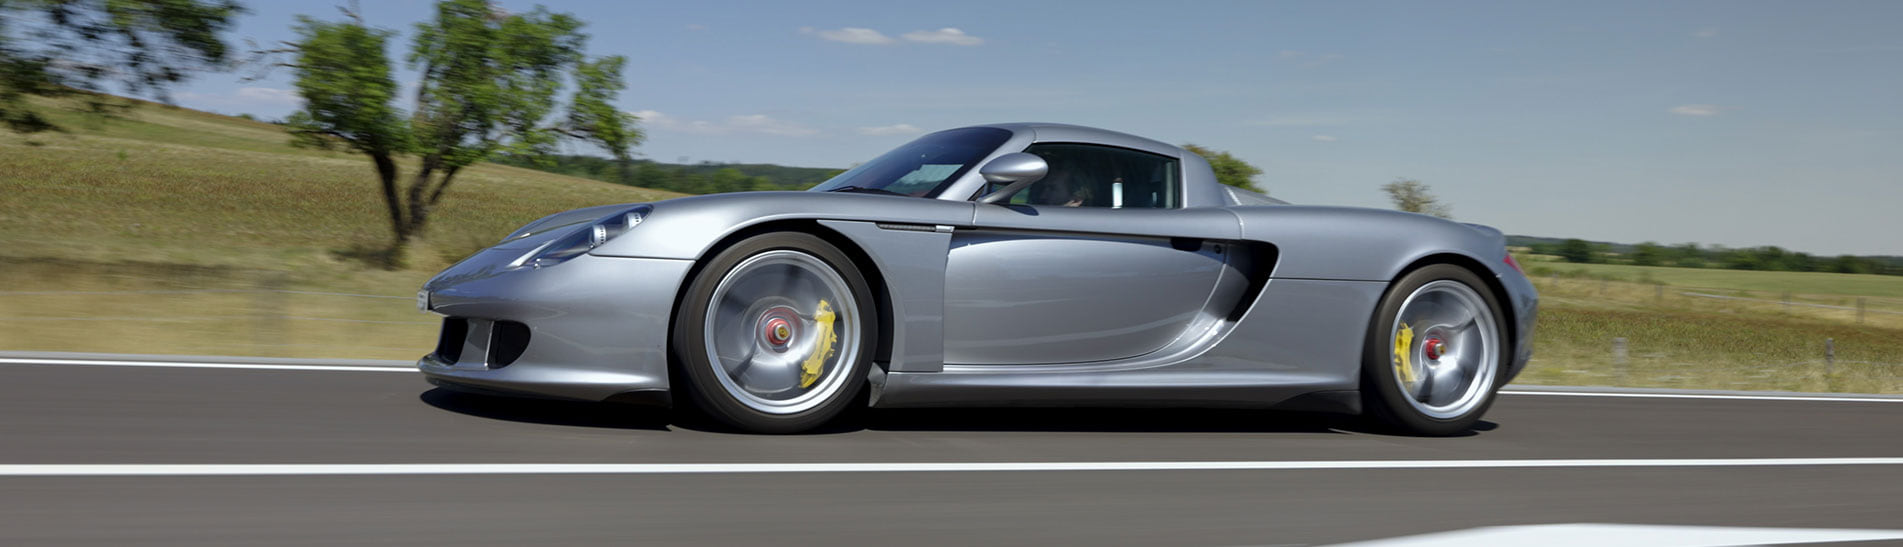 KW V5 with optional HLS Porsche Carrera GT | KW suspensions US